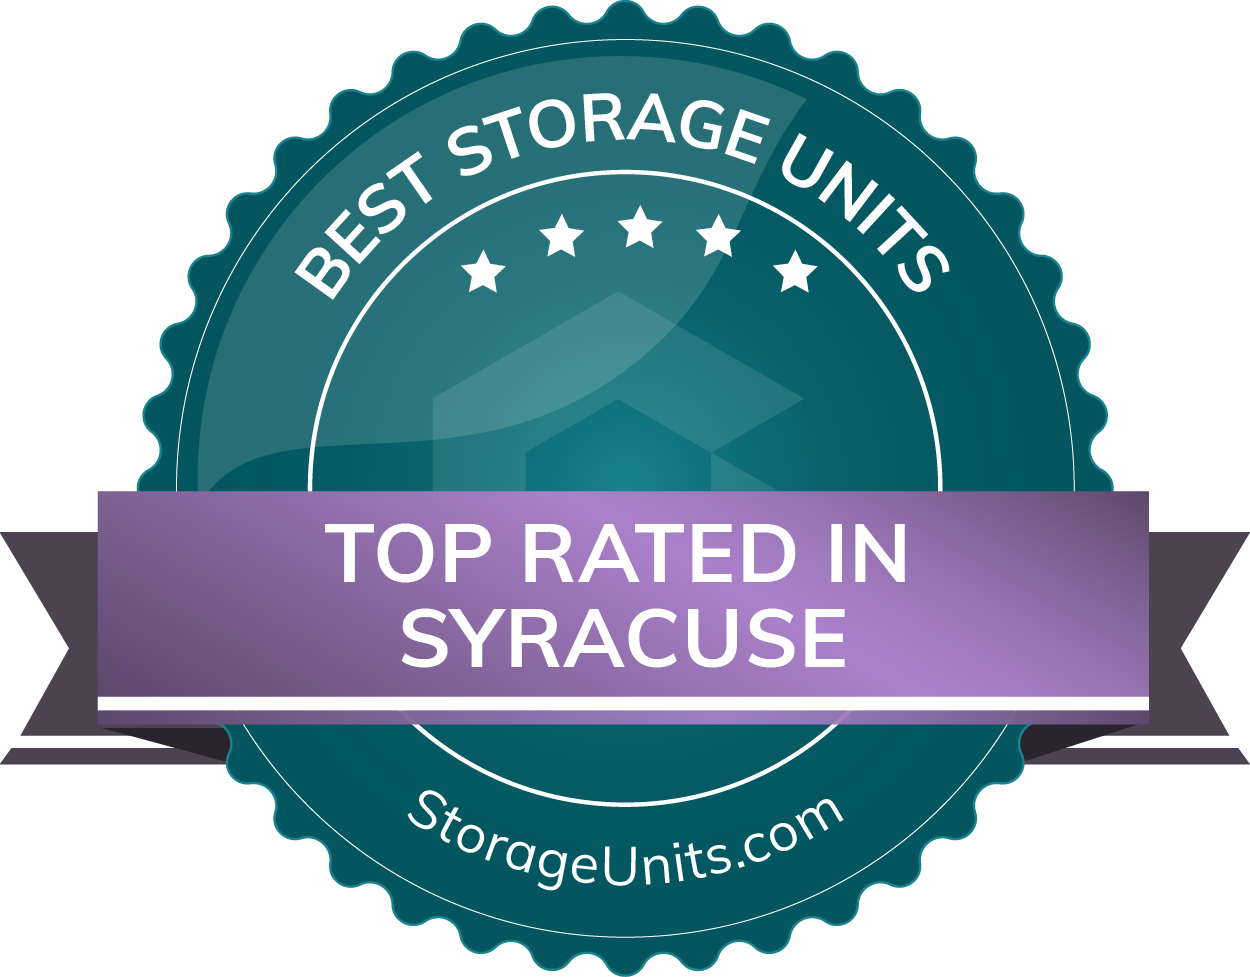 Best Self Storage Units in Syracuse, New York of 2022